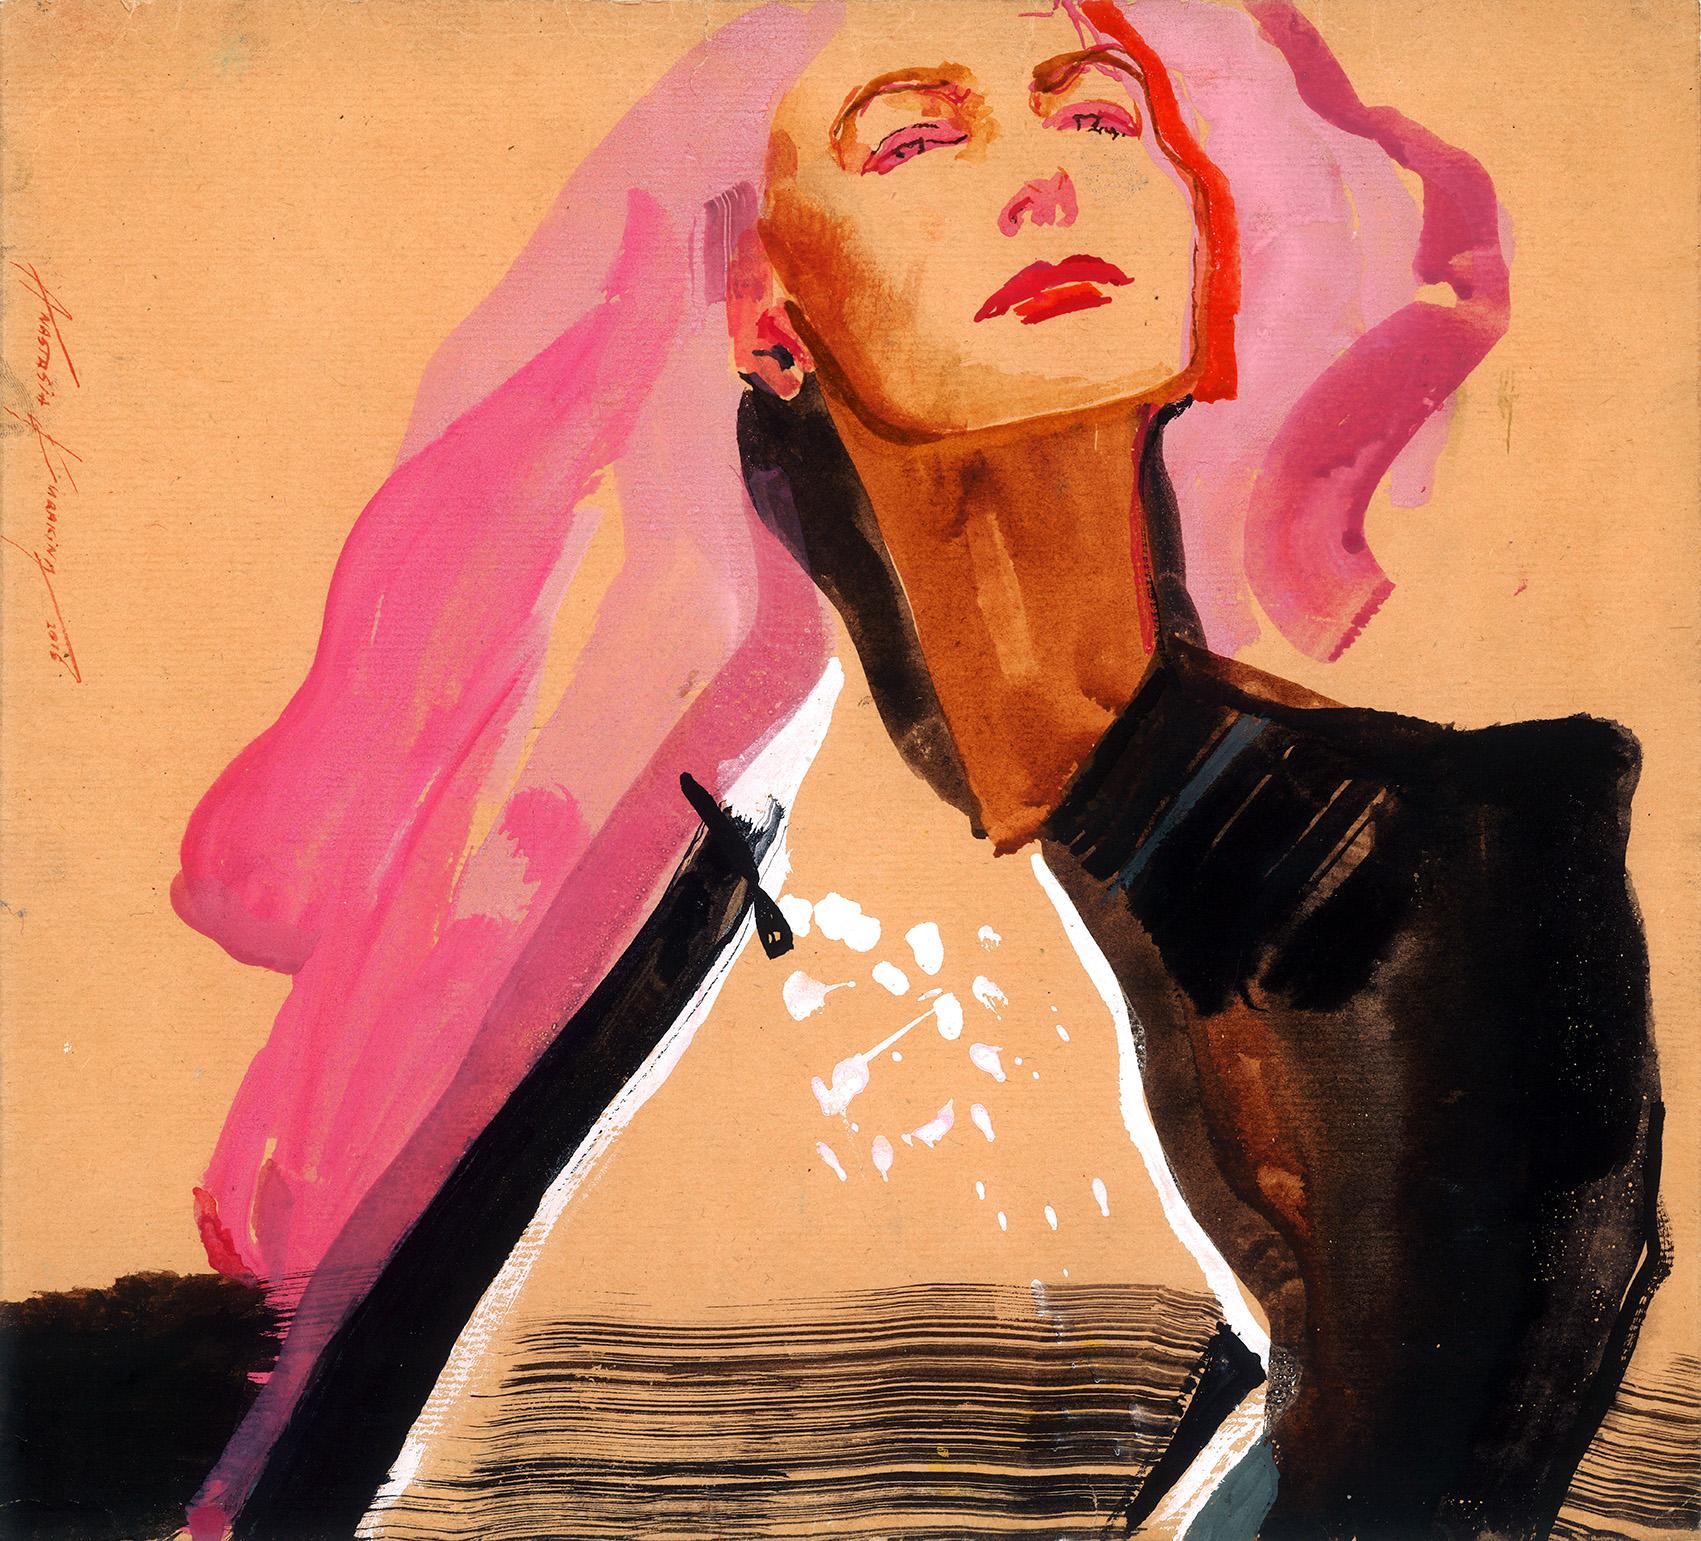   femelle  peinture sur papier glacé sur toile Diva - Print de Anastasia Kurakina